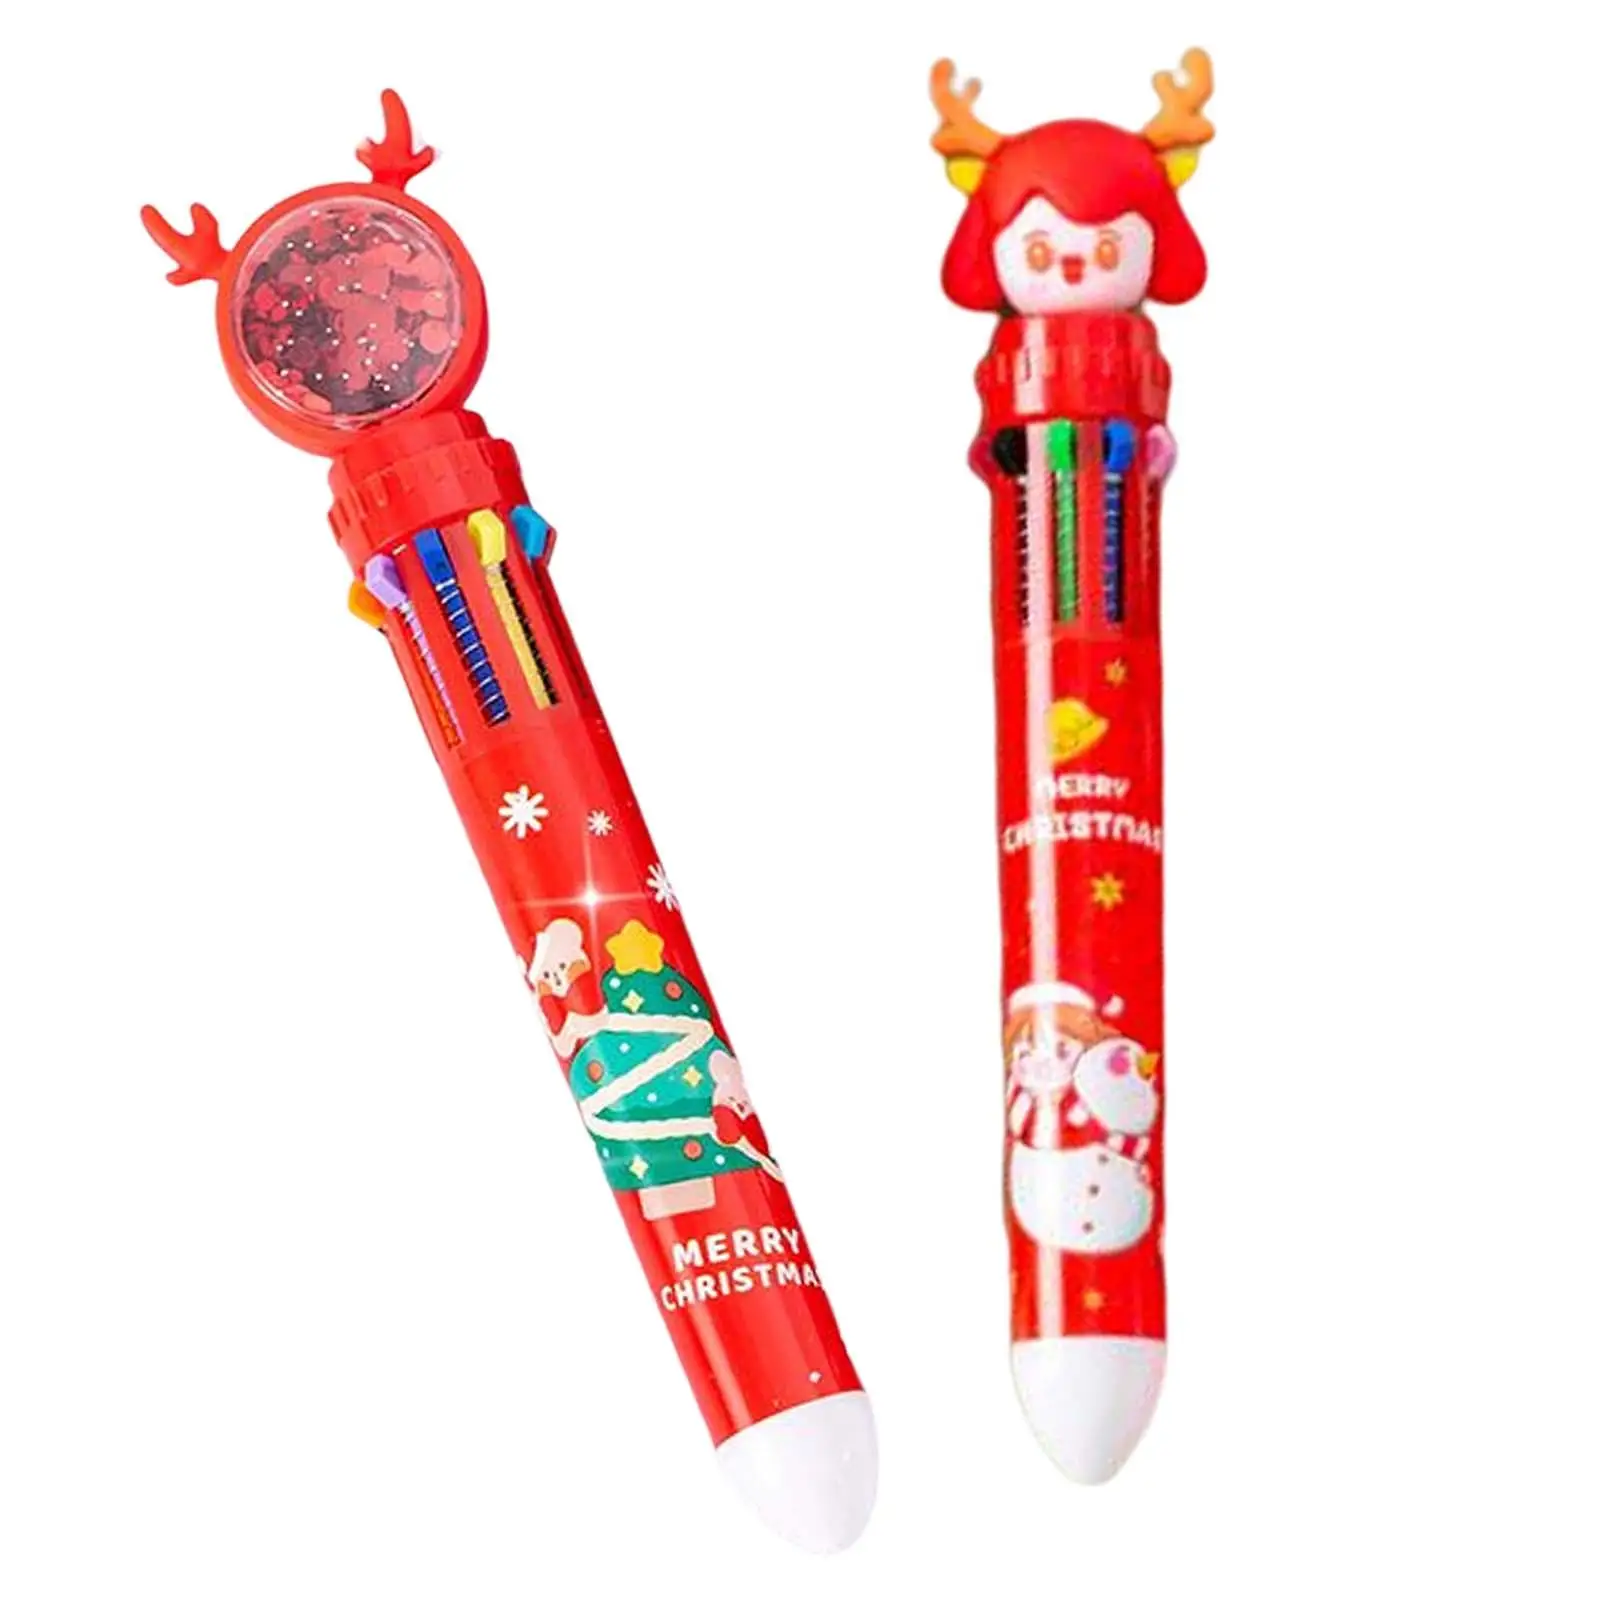 10 Colors Ballpoint Pen Retractable Ballpoint Pen 10 in 1 Multicolor Shuttle Pen 0.5mm for School Office Supplies Children Gift